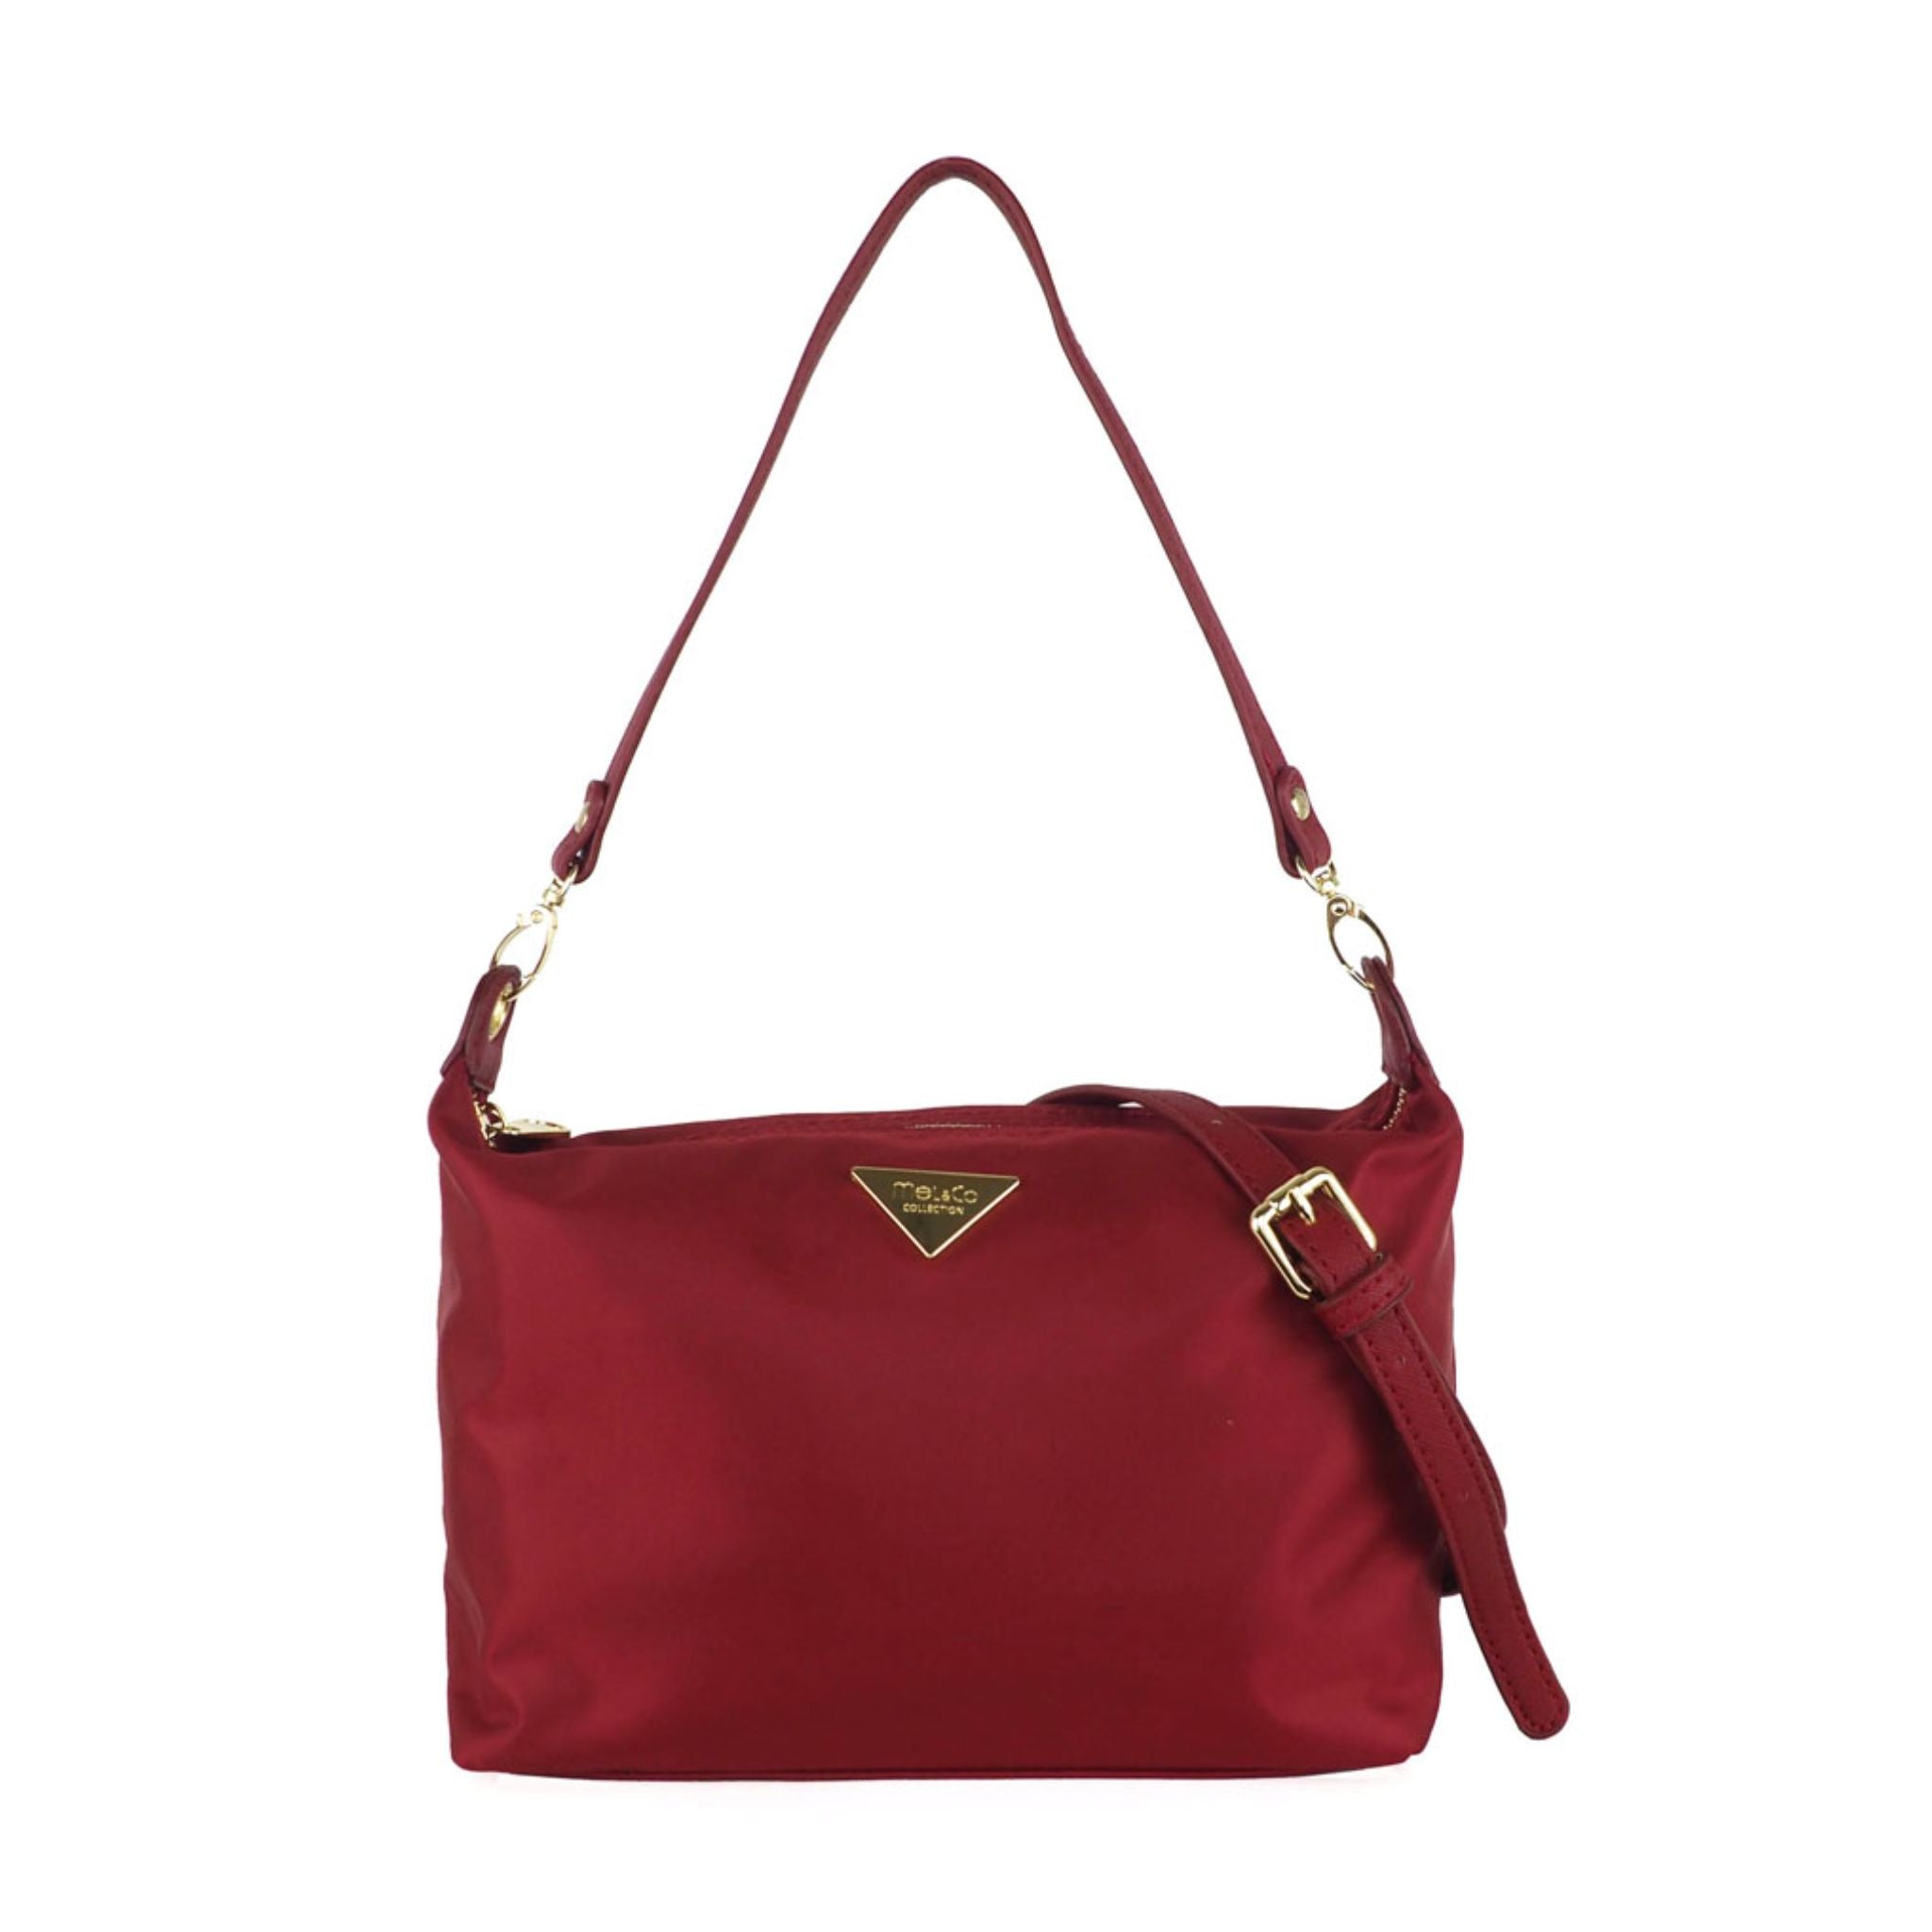 Mel&Co Basic Nylon Shoulder Sling Bag Dark Red